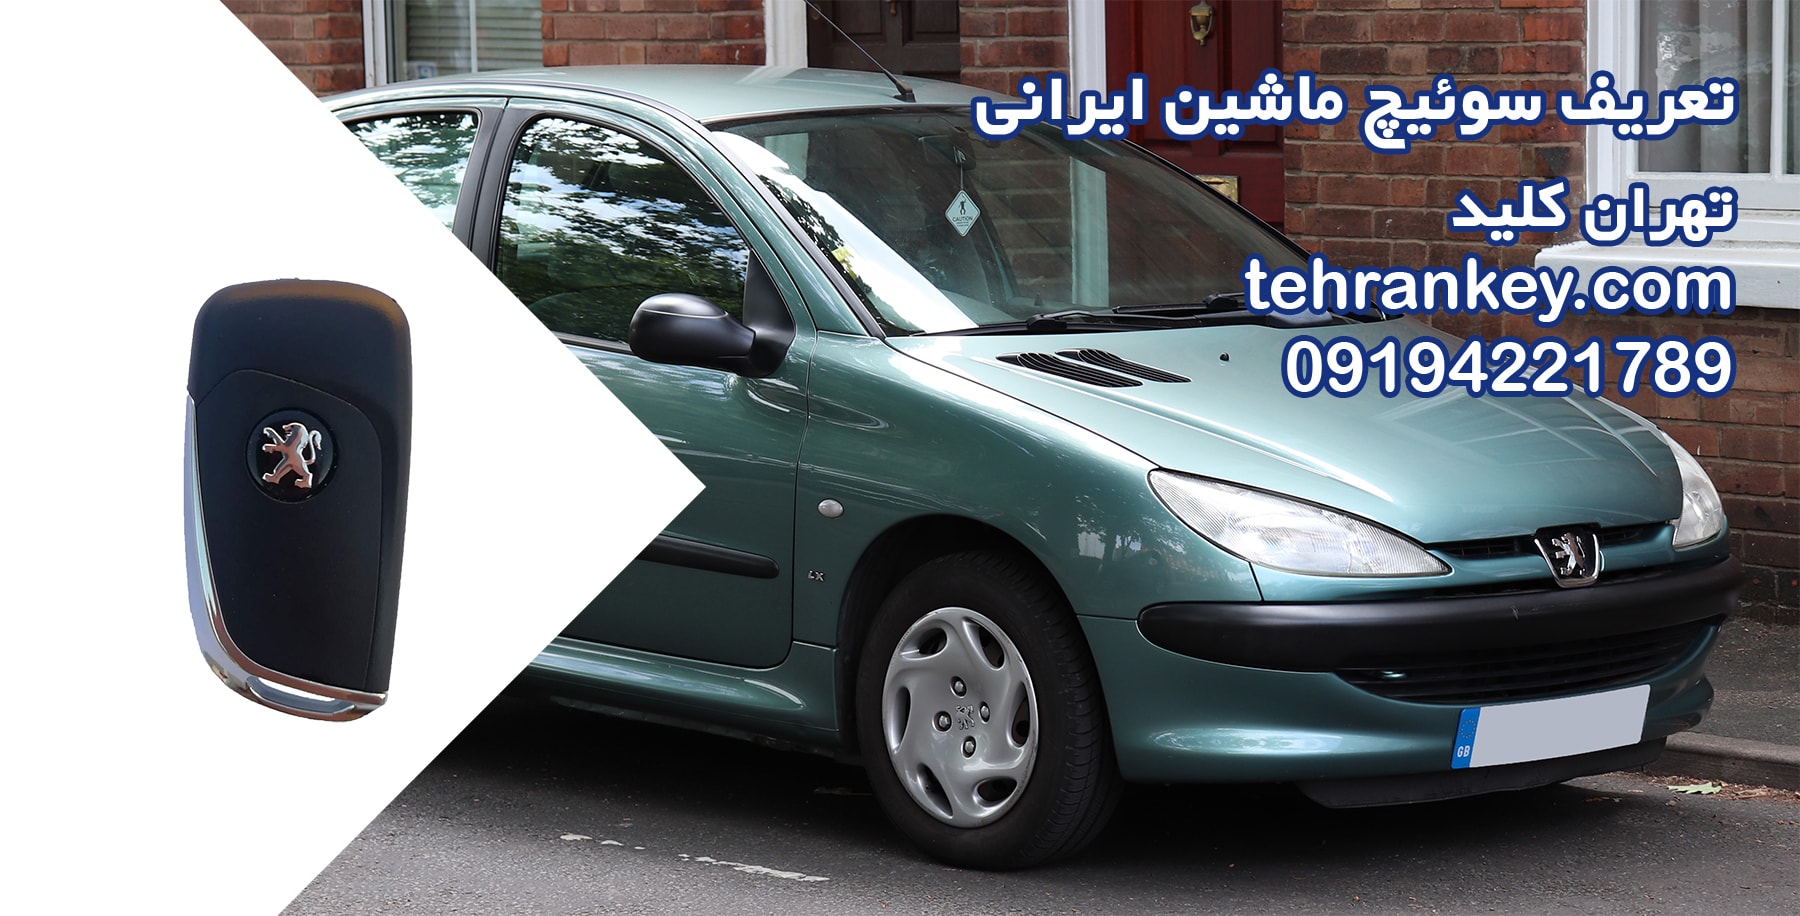 تعریف سوئیچ ماشین ایرانی